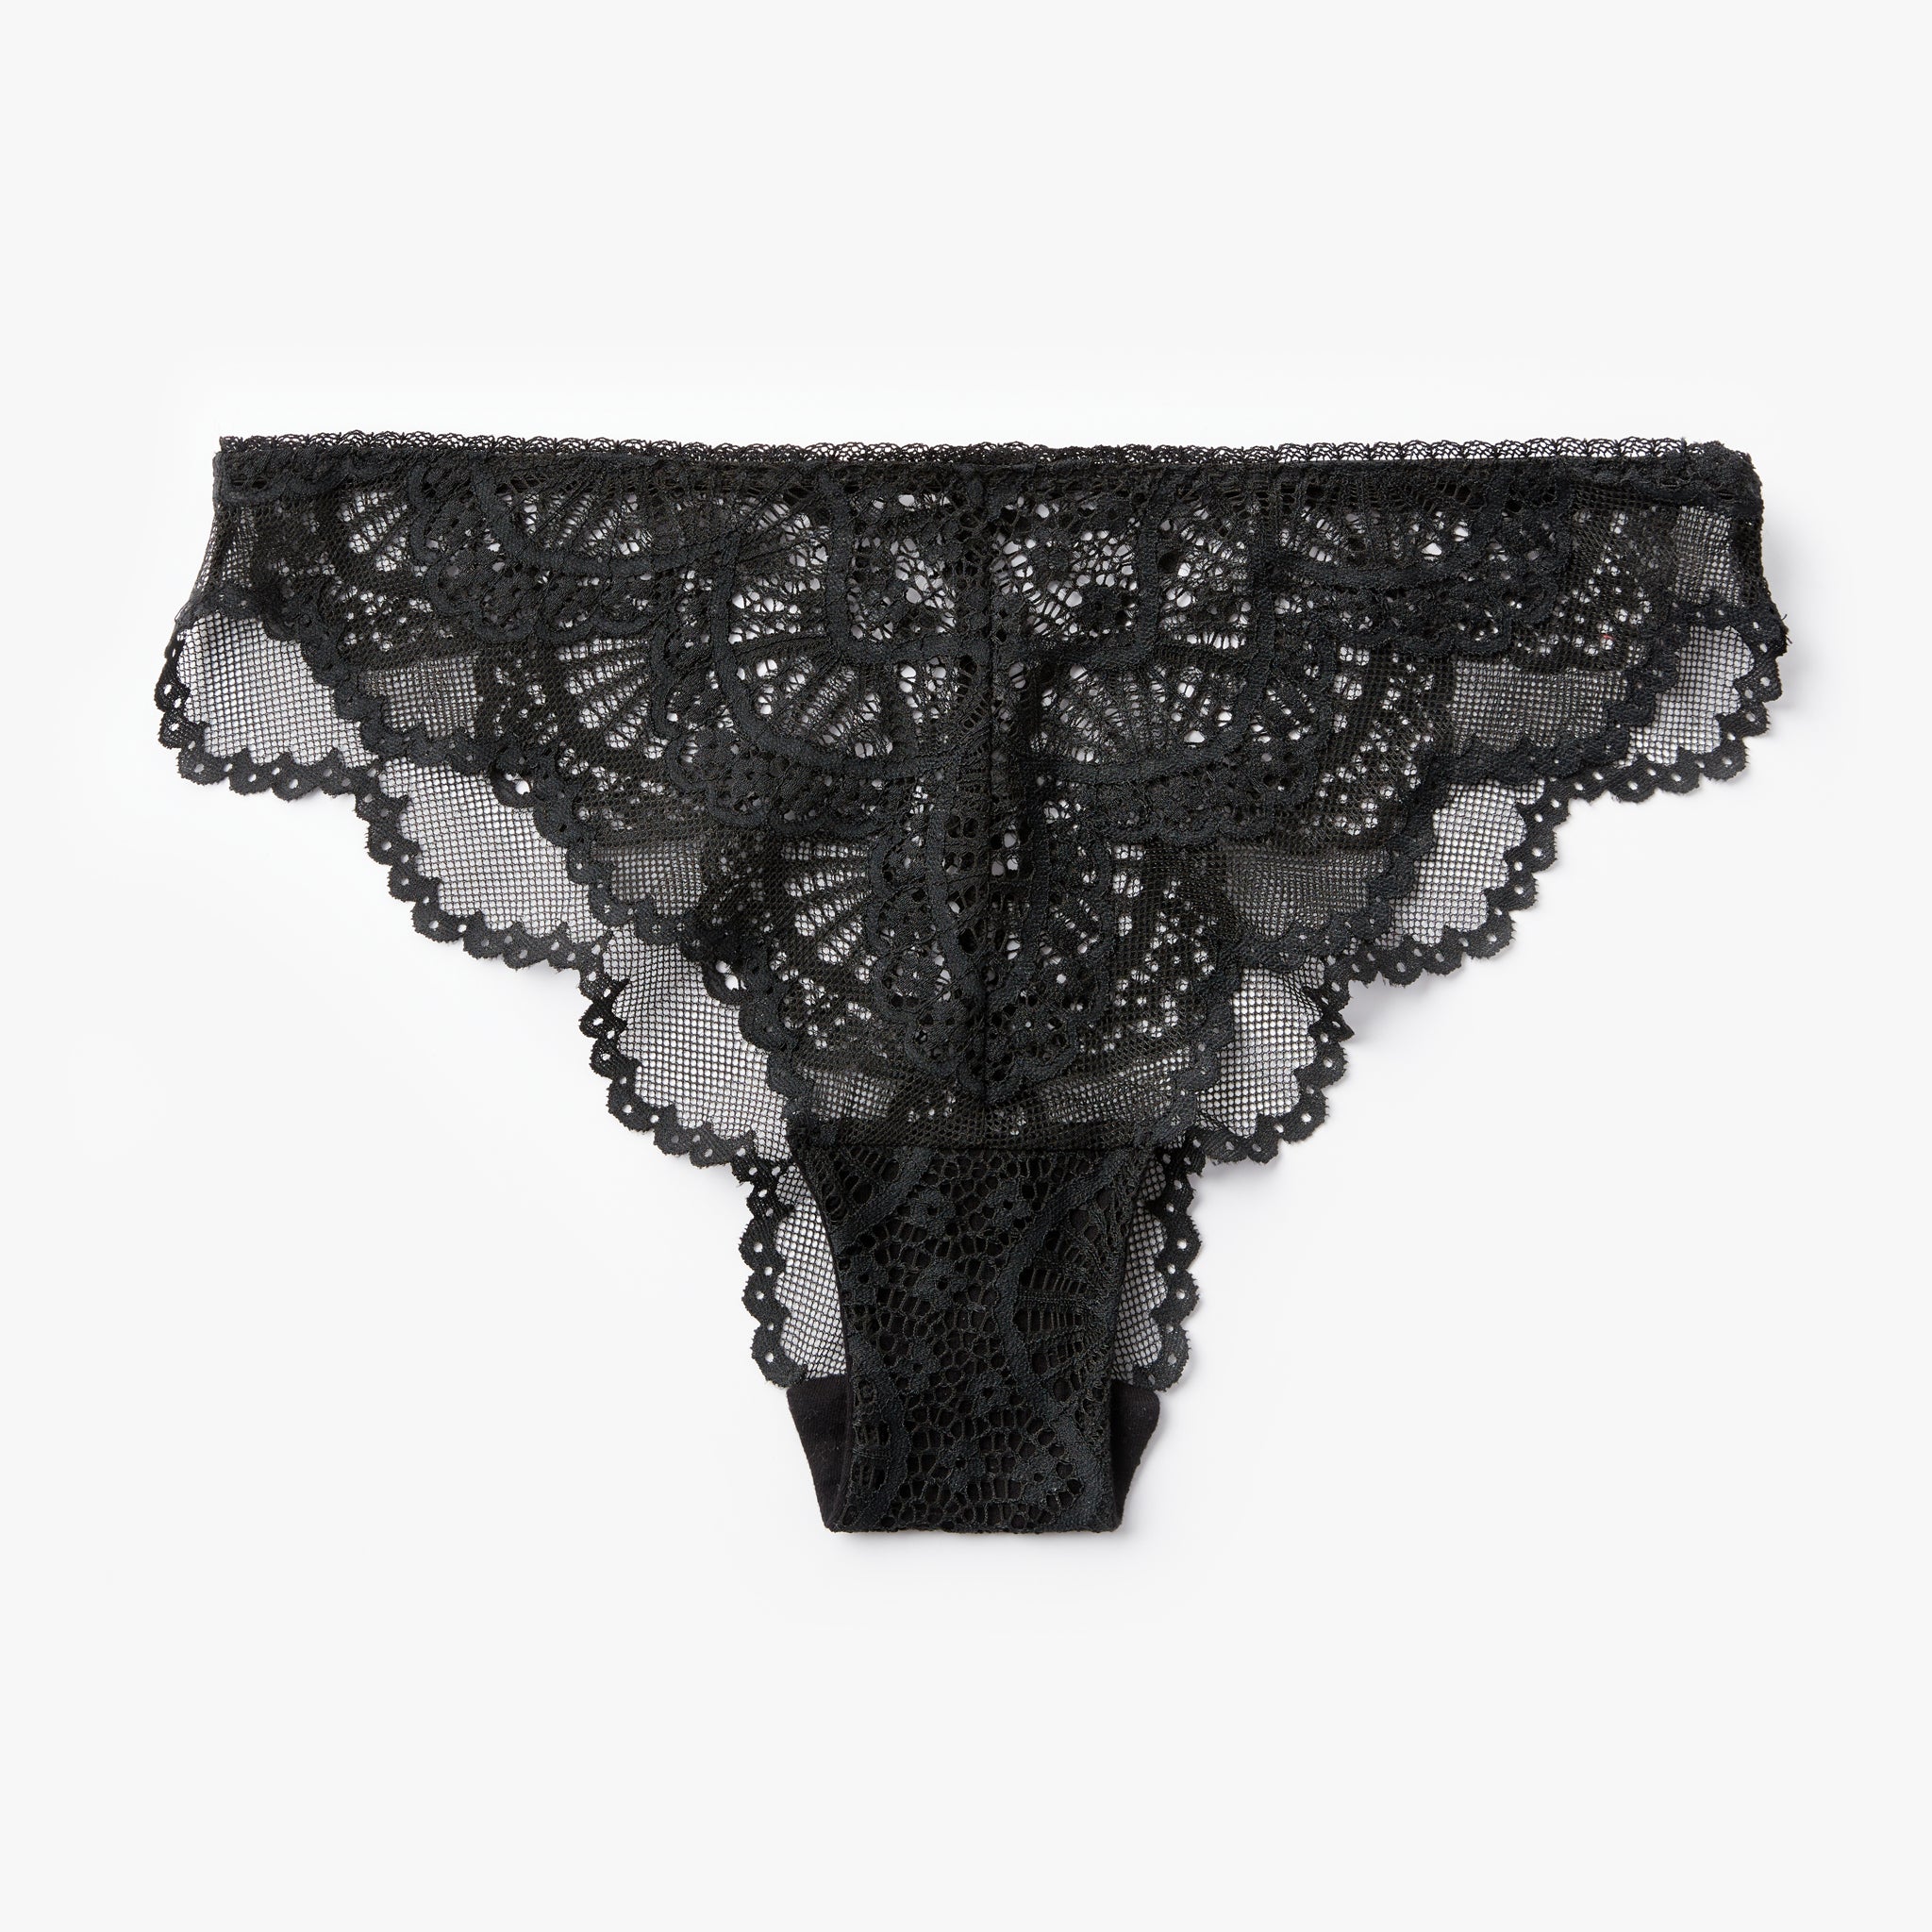 Lovin69 Sexy See-Through Lace Bikini T-Back Underwear AC0047